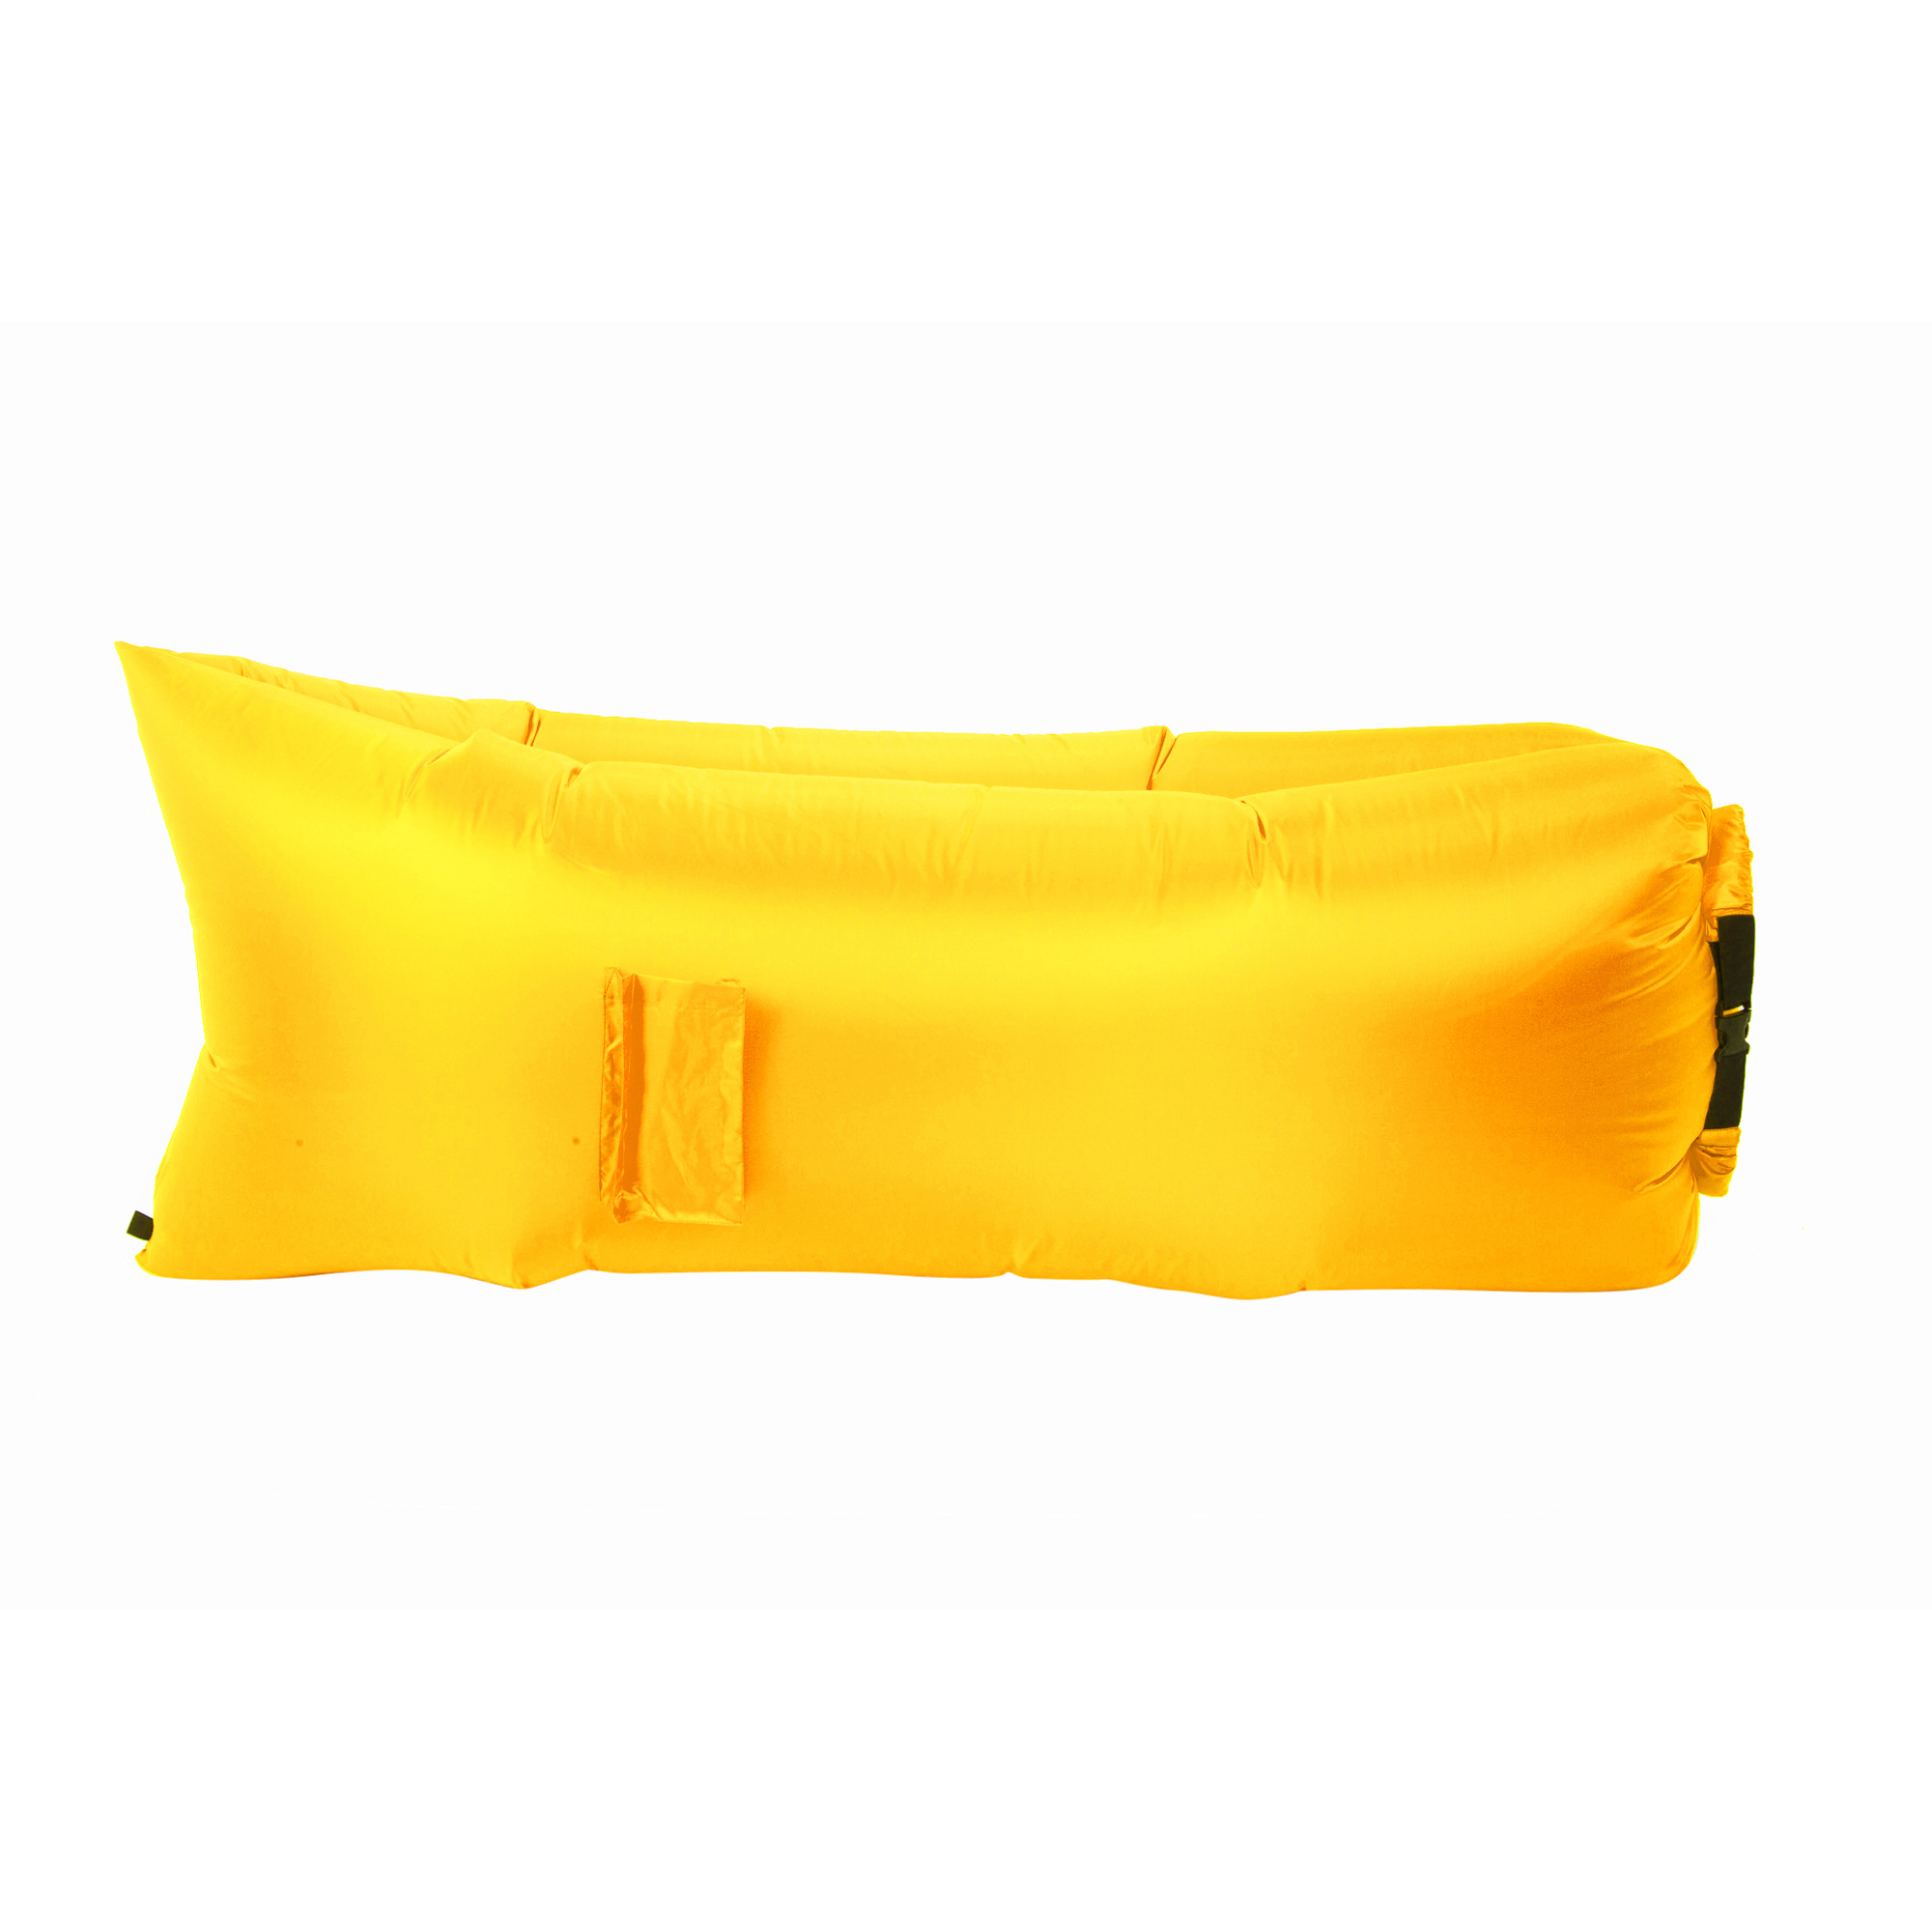 Надувной лежак Aerodivan желтый (НЛ111), цвет жёлтый - фото 1